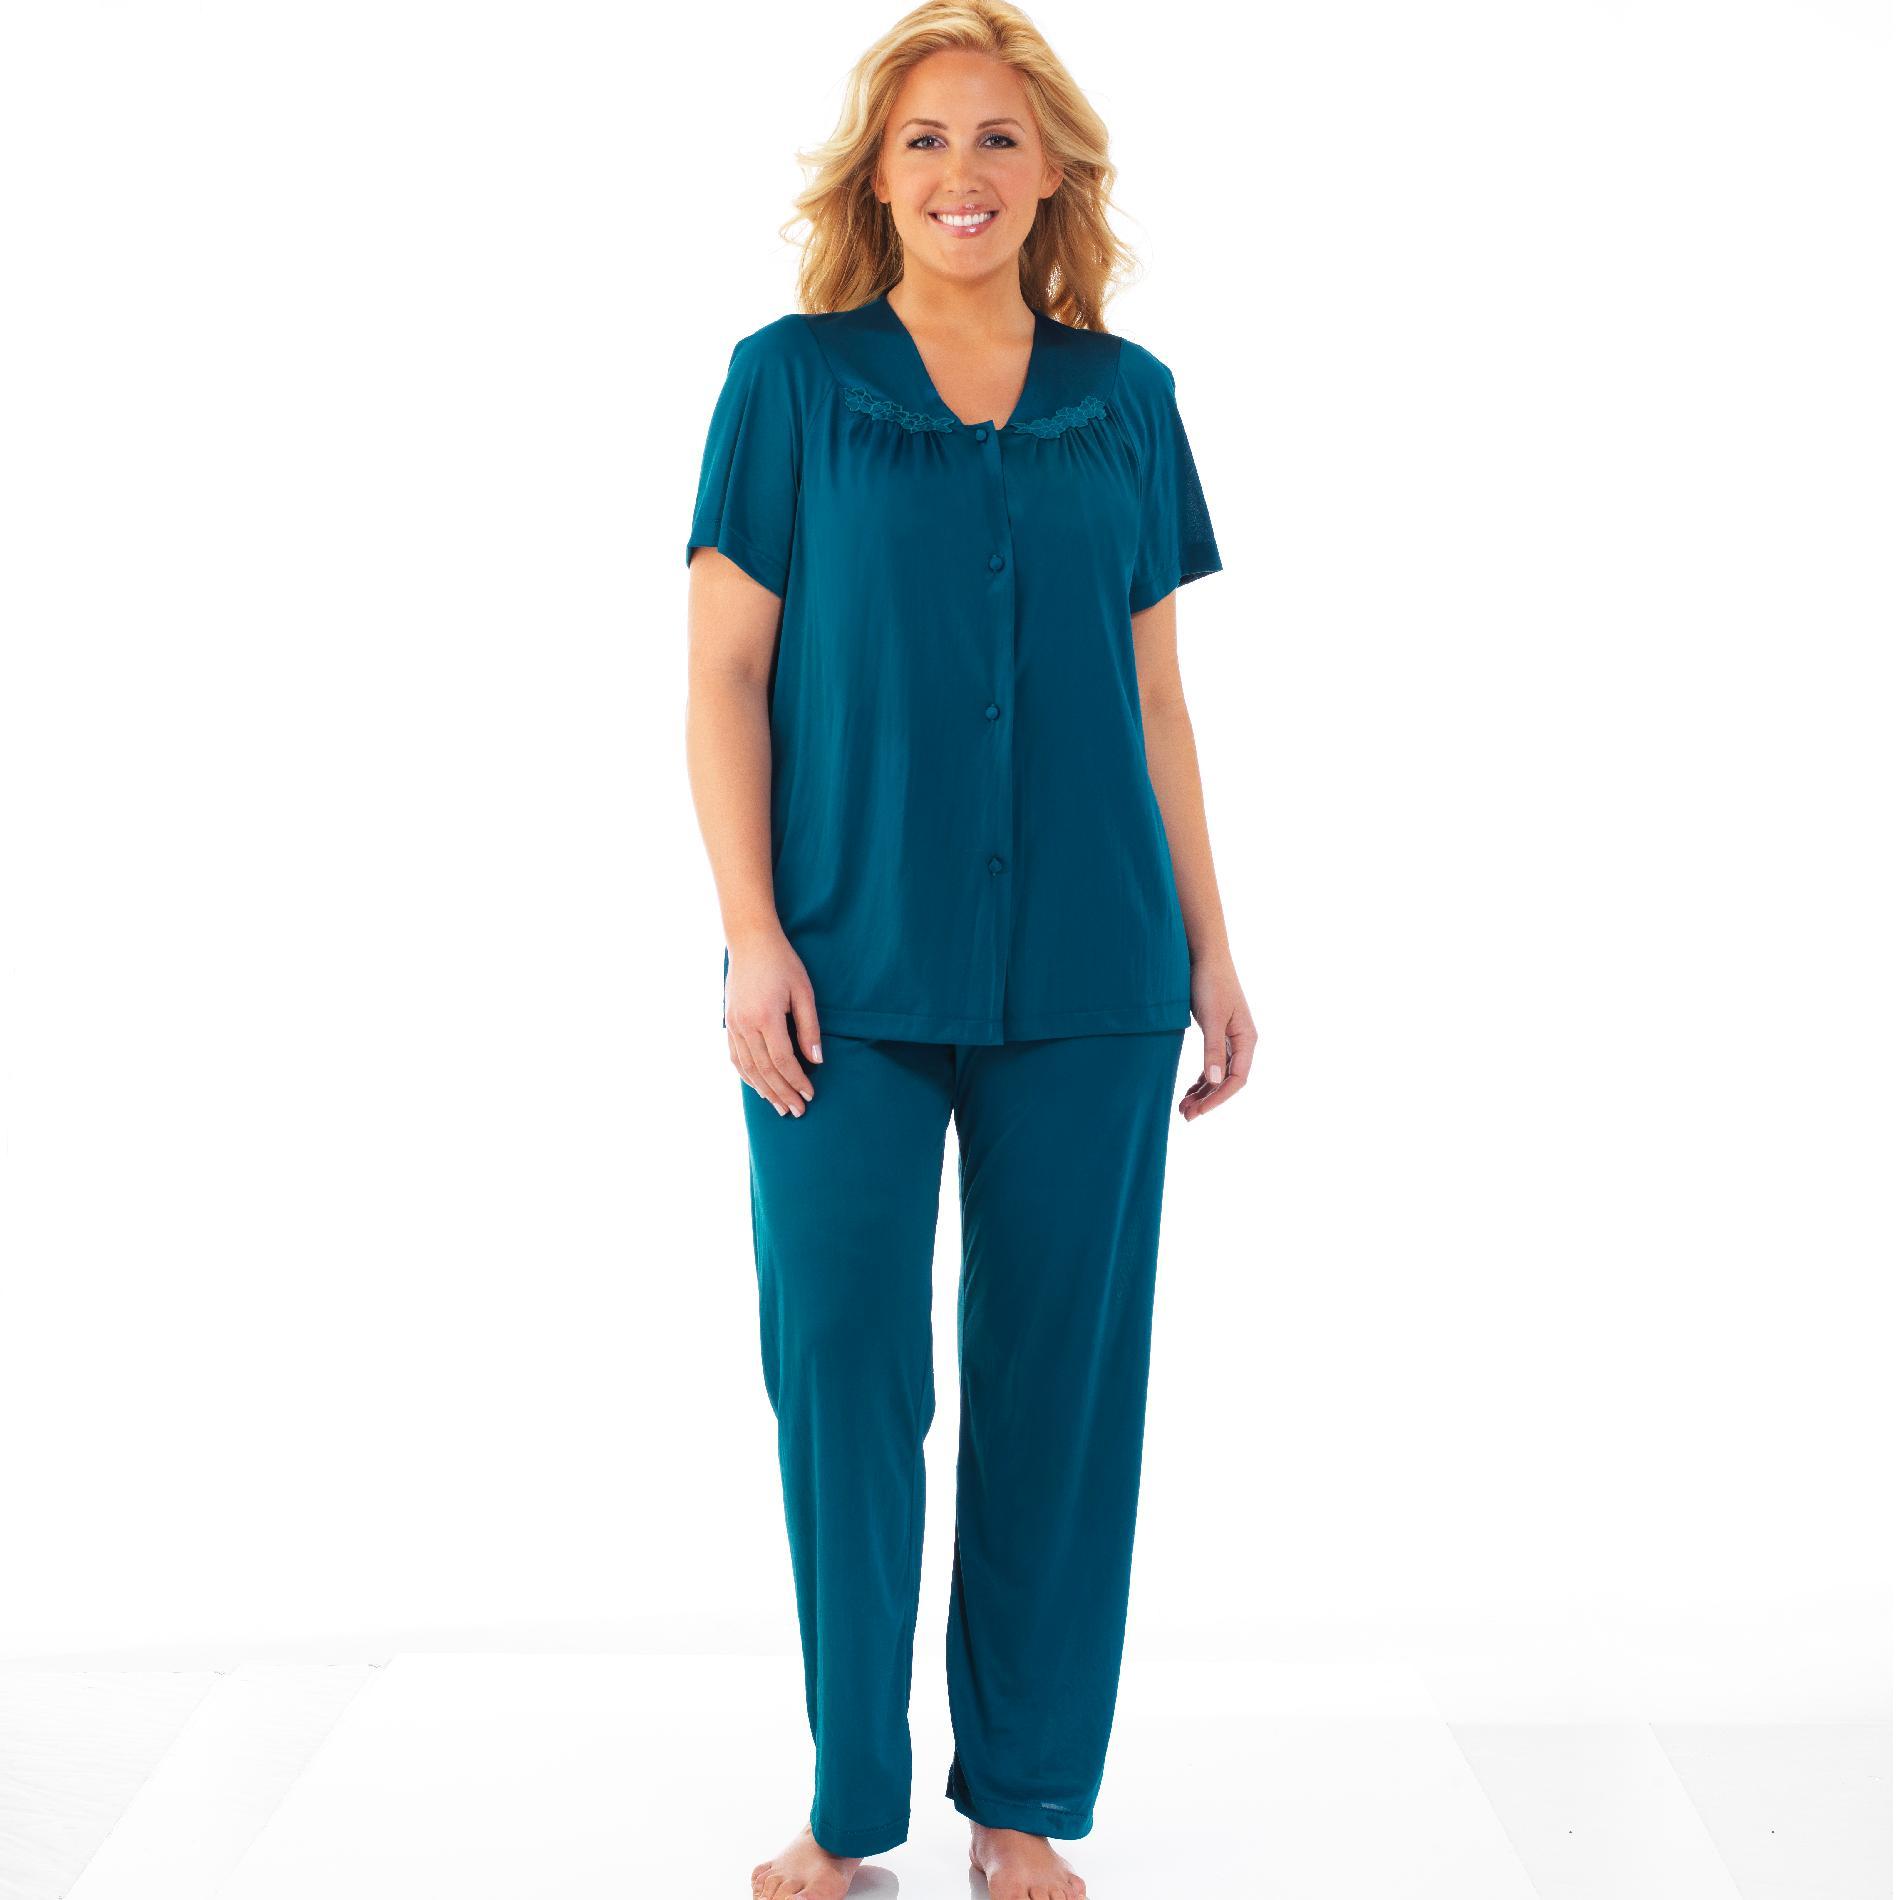 UPC 083623334271 product image for Women's Vanity Fair Colortura Short Sleeve Pajama Set | upcitemdb.com